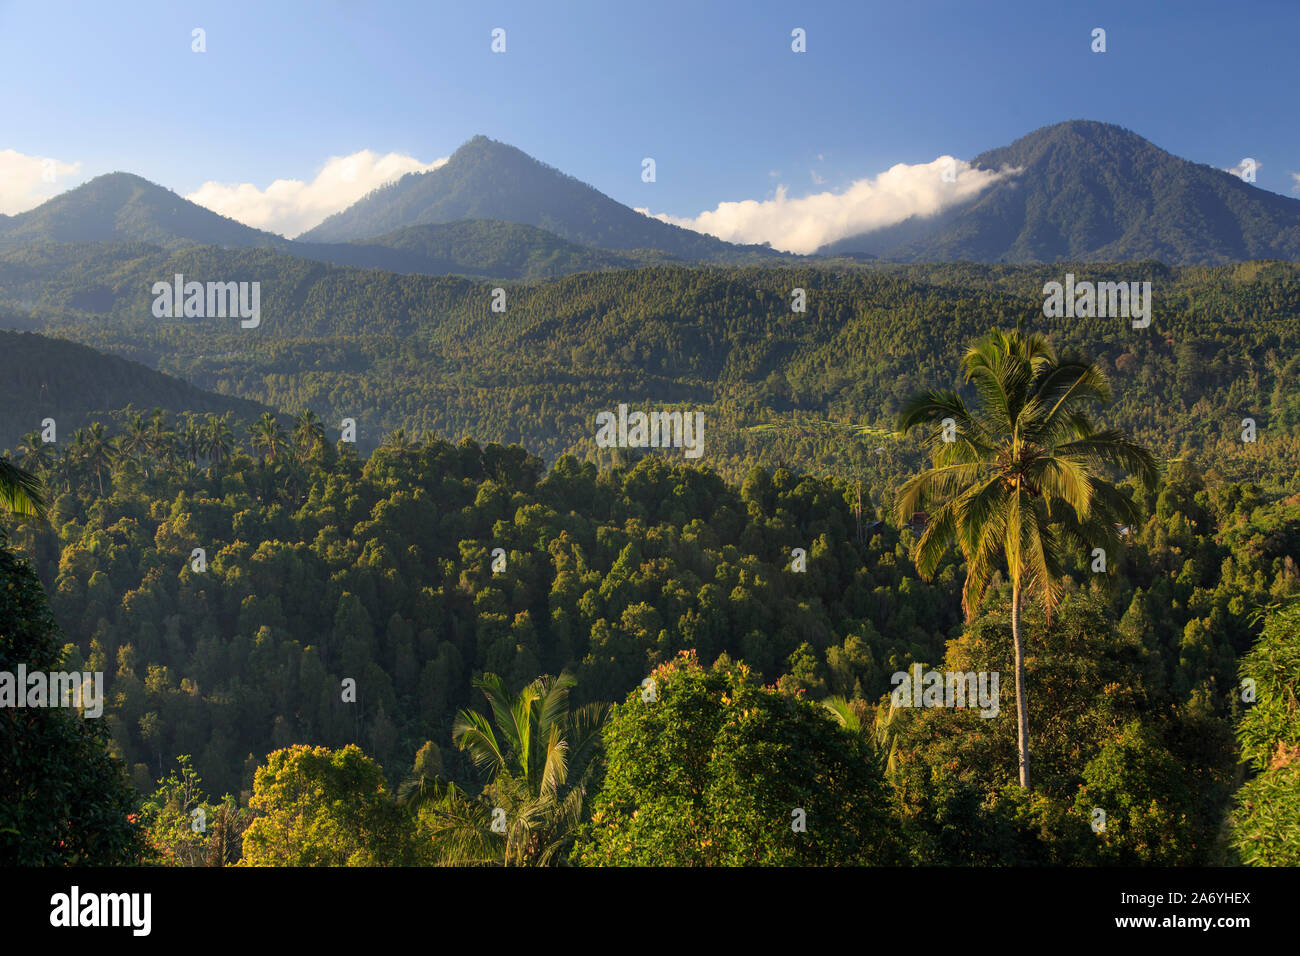 Indonesia, Bali, Central Mountains, Munduk, Mundu Town and mountain landscape seen from the popular hiking destination of Munduk Stock Photo